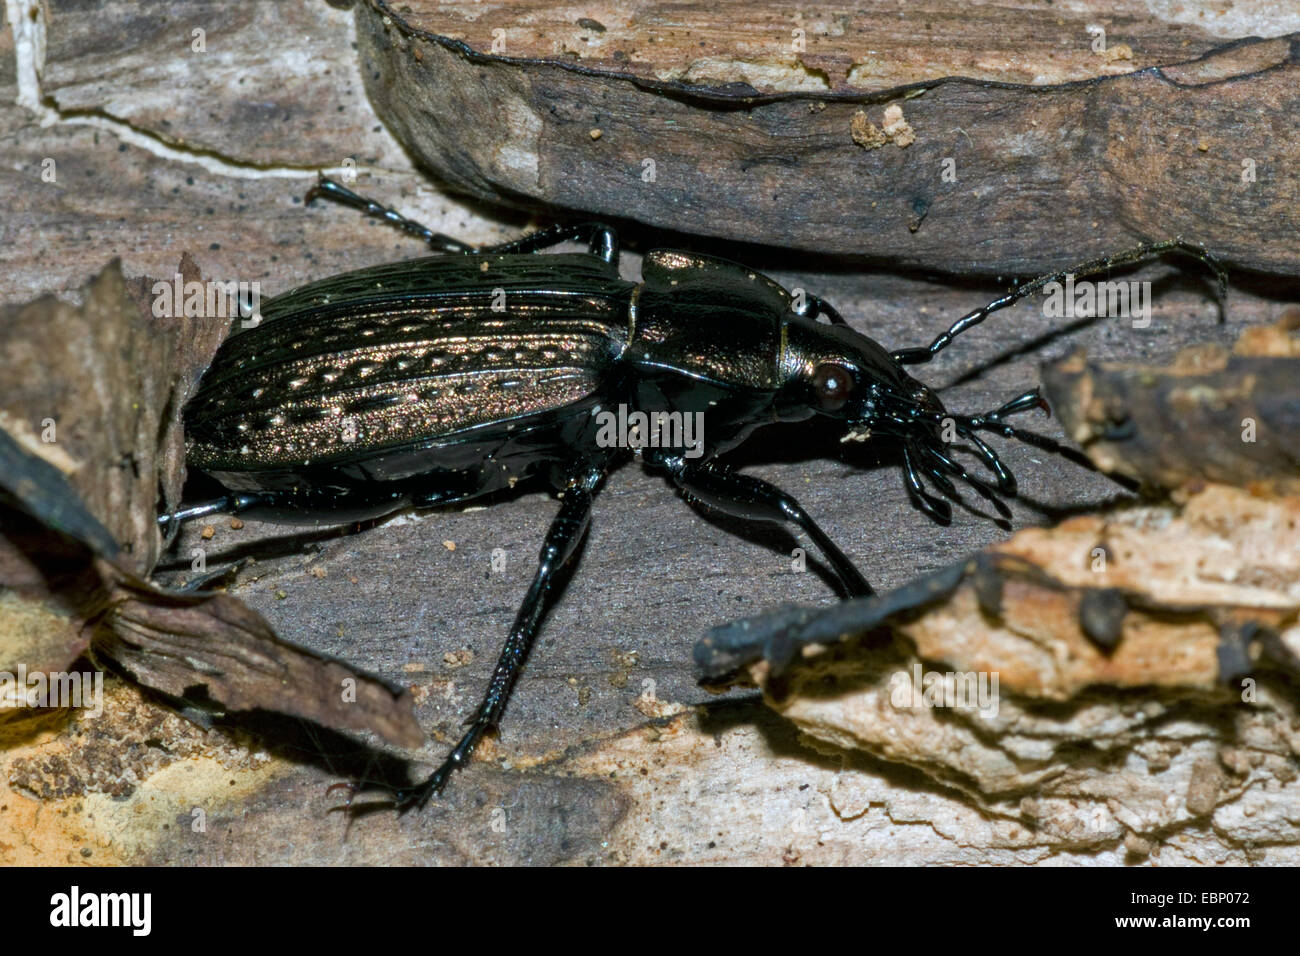 field ground beetle (Carabus granulatus), on the ground, Germany Stock Photo